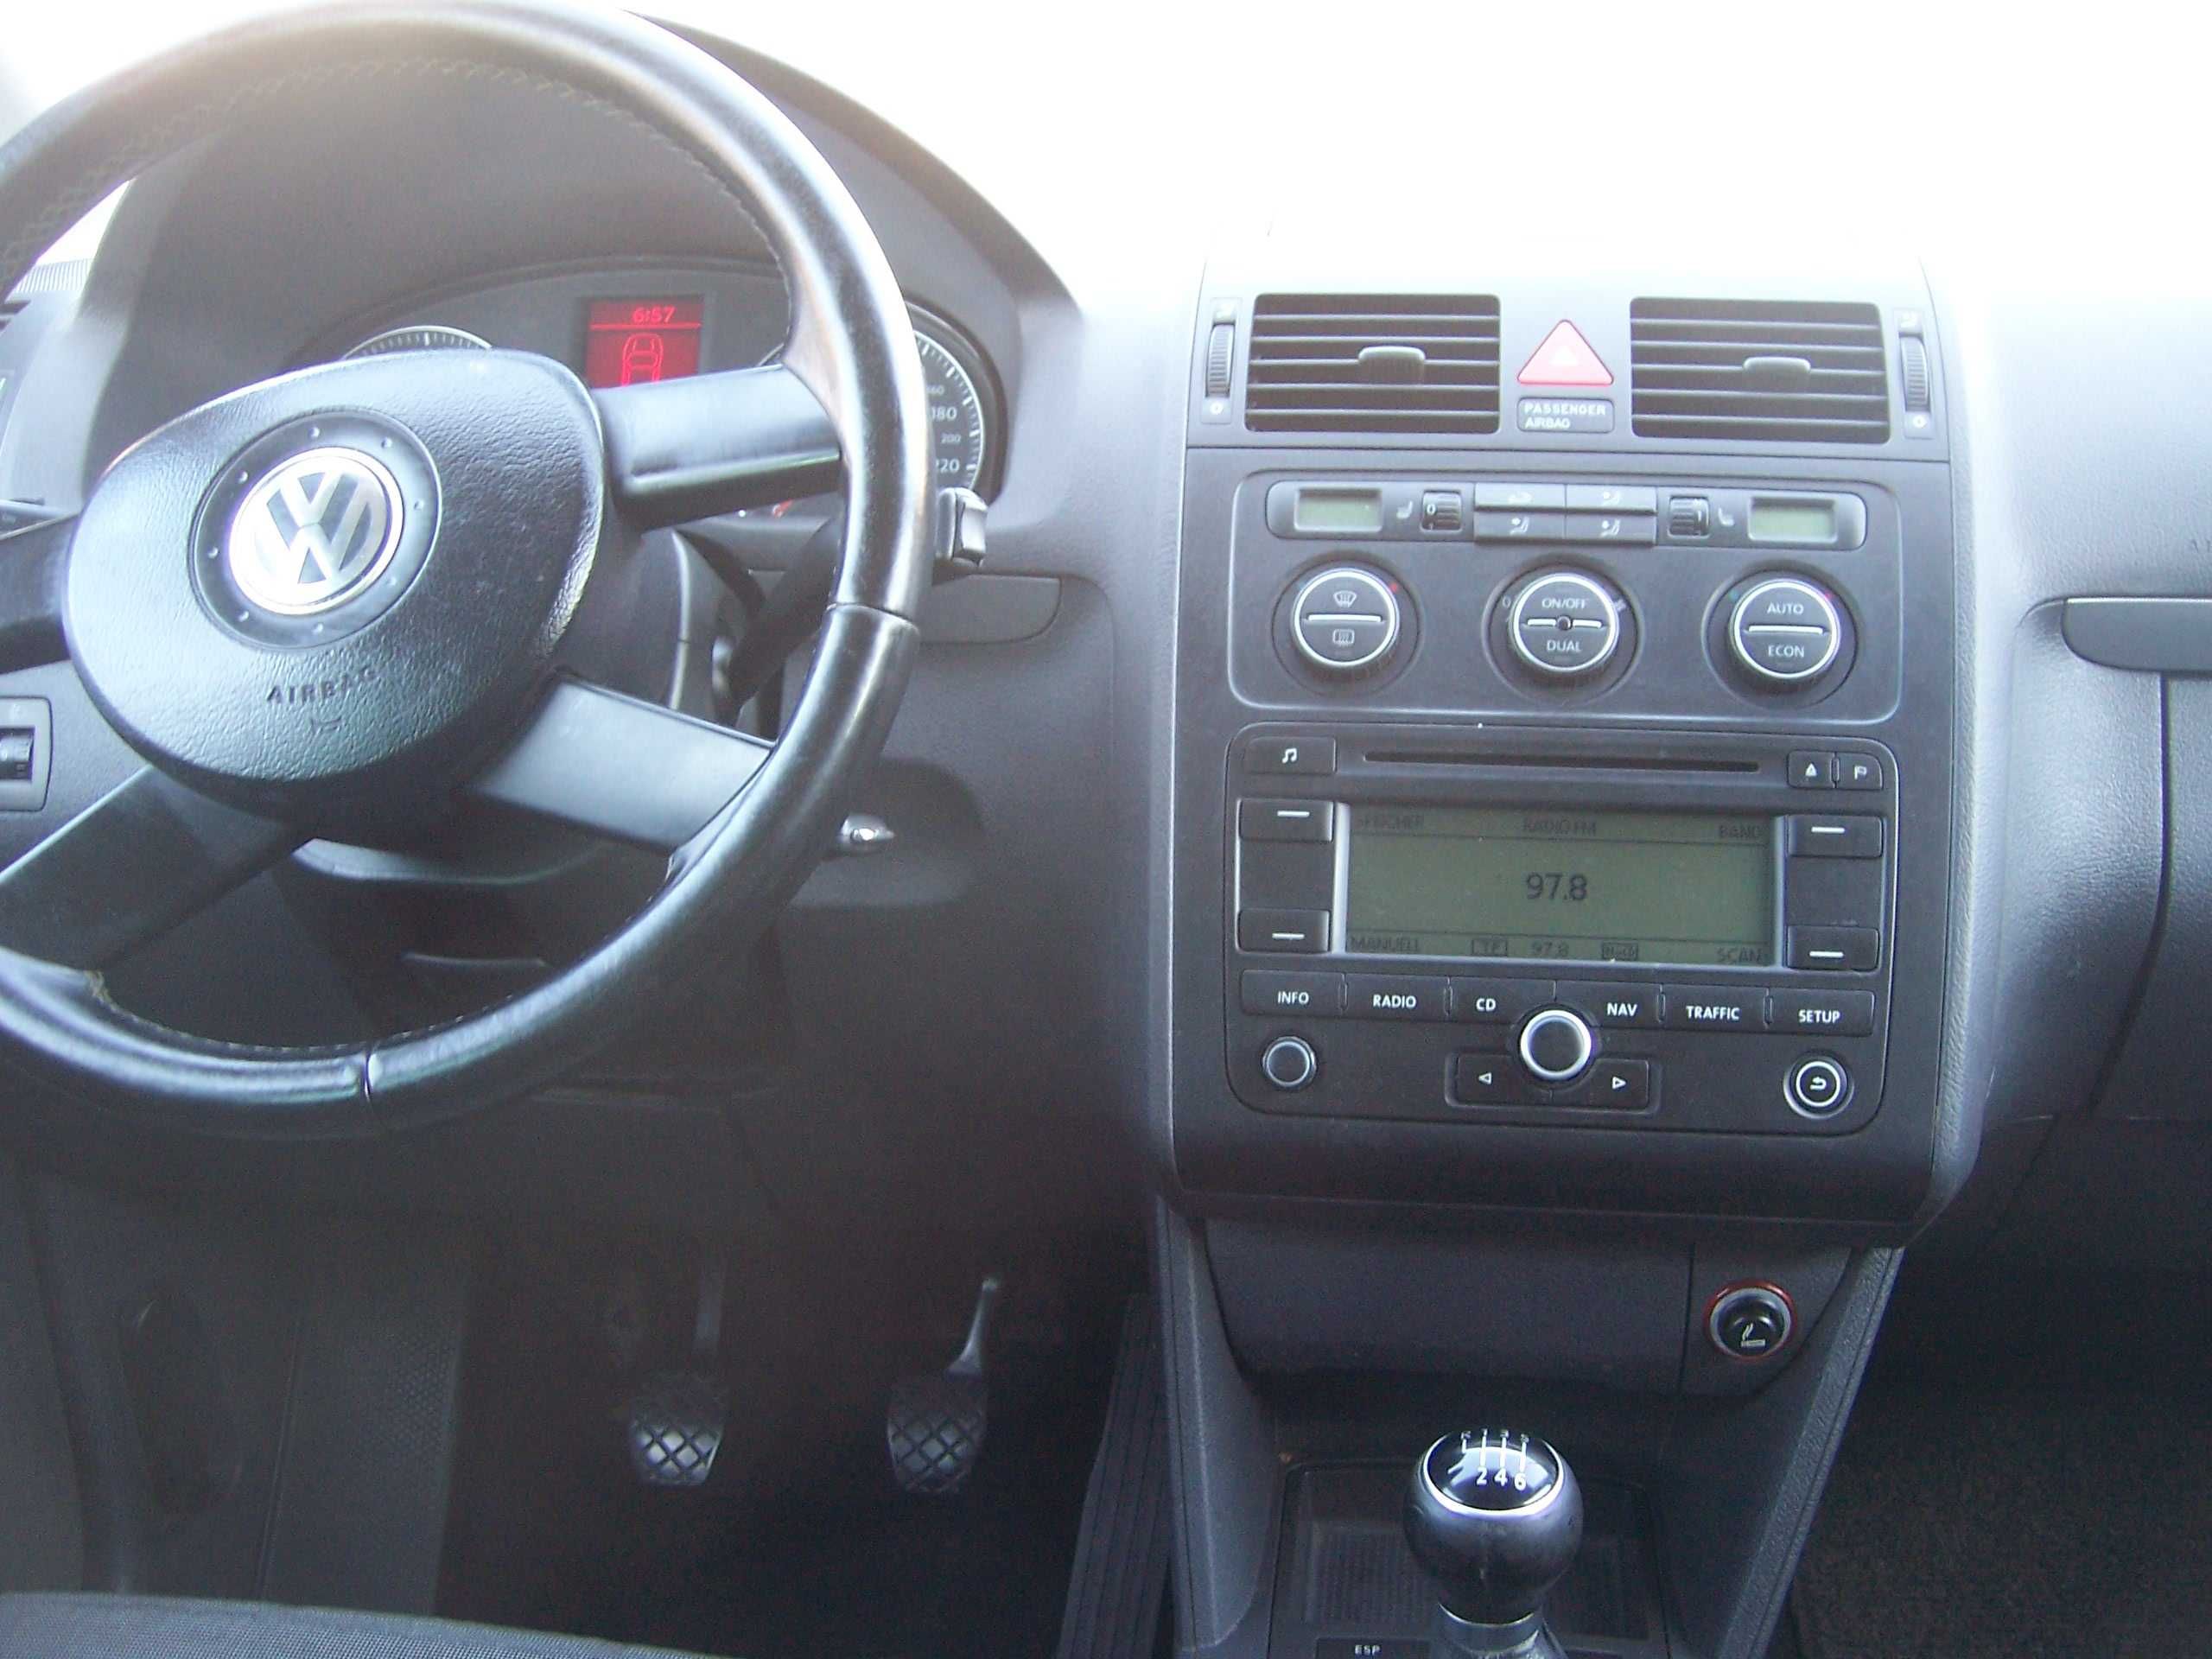 VW Touran 2.0 TDI, Climatronic, Navi, 7 Locuri, Import Germania